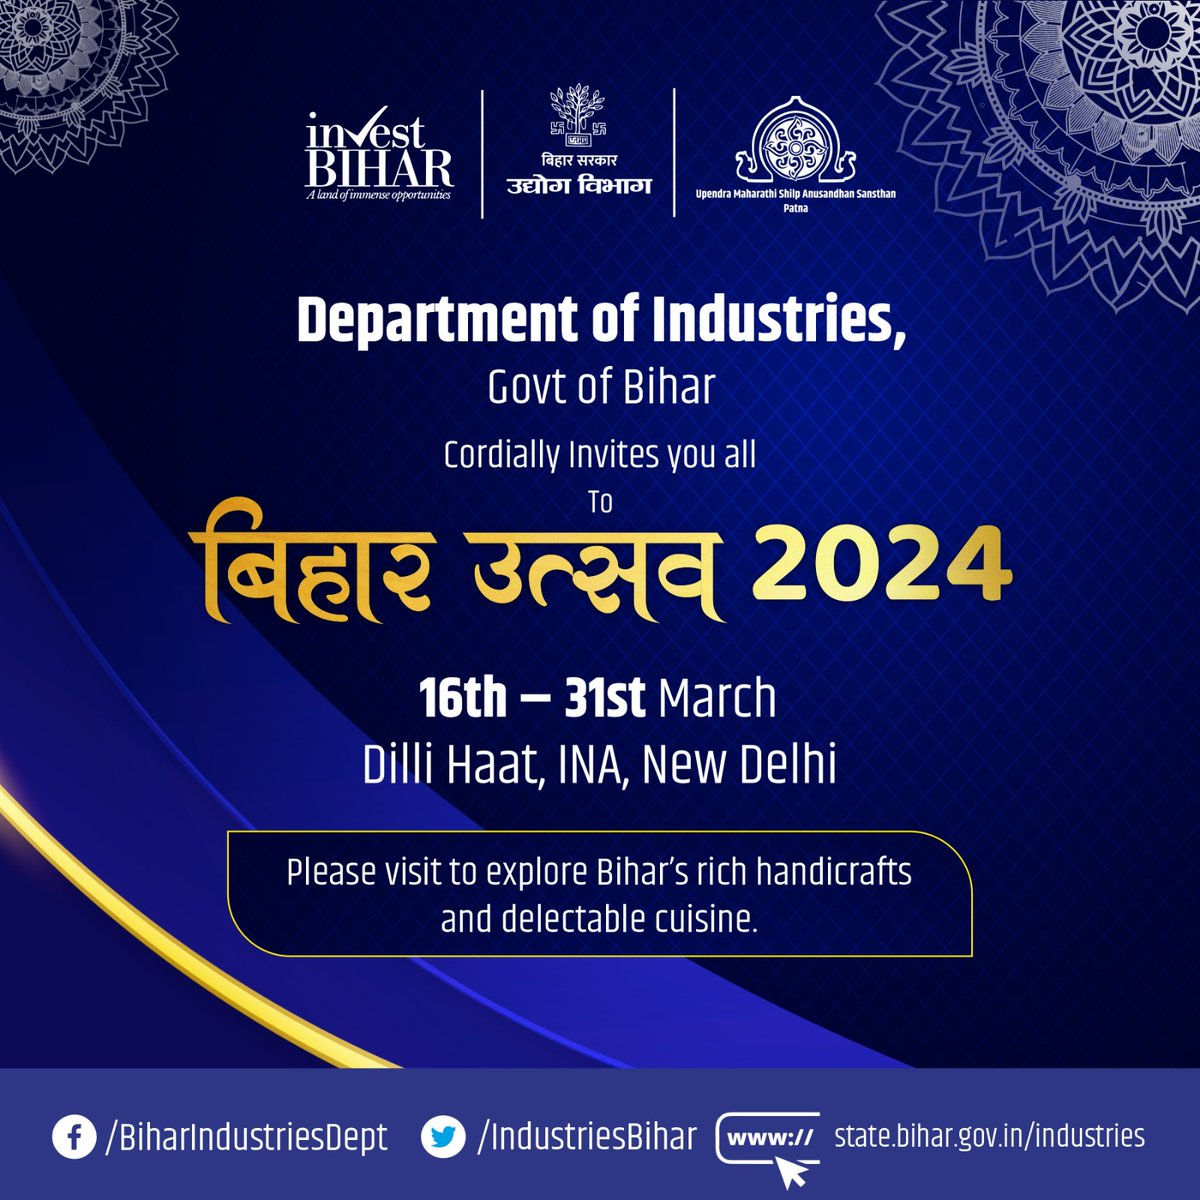 The Department of Industries govt of Bihar Invites you at Bihar Utsav from 16th to 31st March. Venu :Delhi Haat,INA,New Delhi #IndustriesBihar #BIHARHAITAIYAR #InvestInBihar @SandeepPoundrik